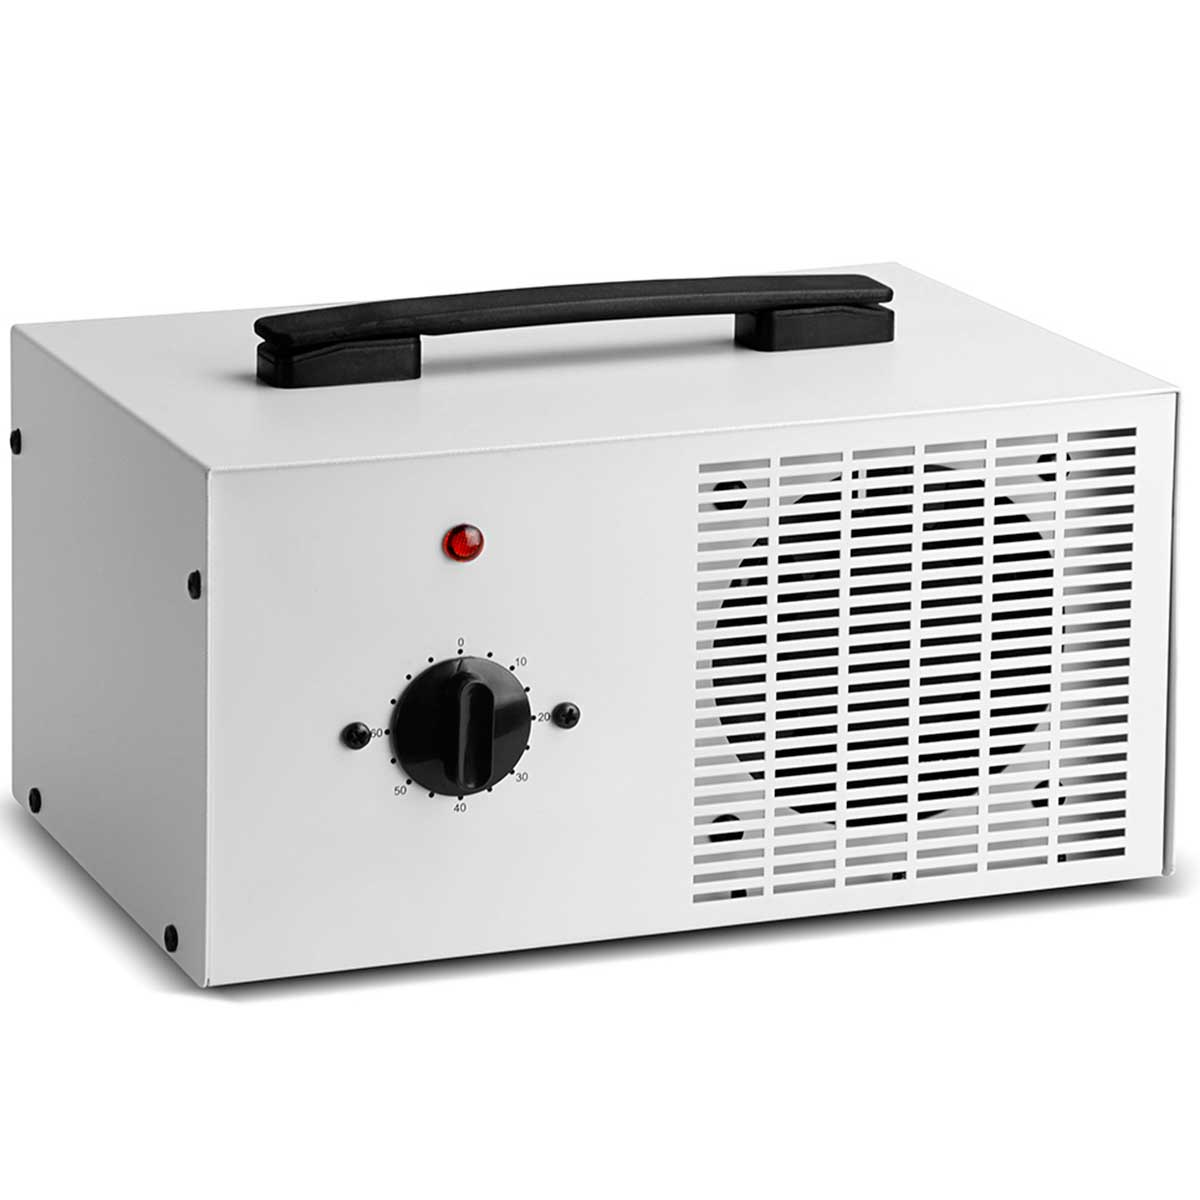 Generador de ozono - Ozono Pro10000 GRIDINLUX, 126 W, Blanco